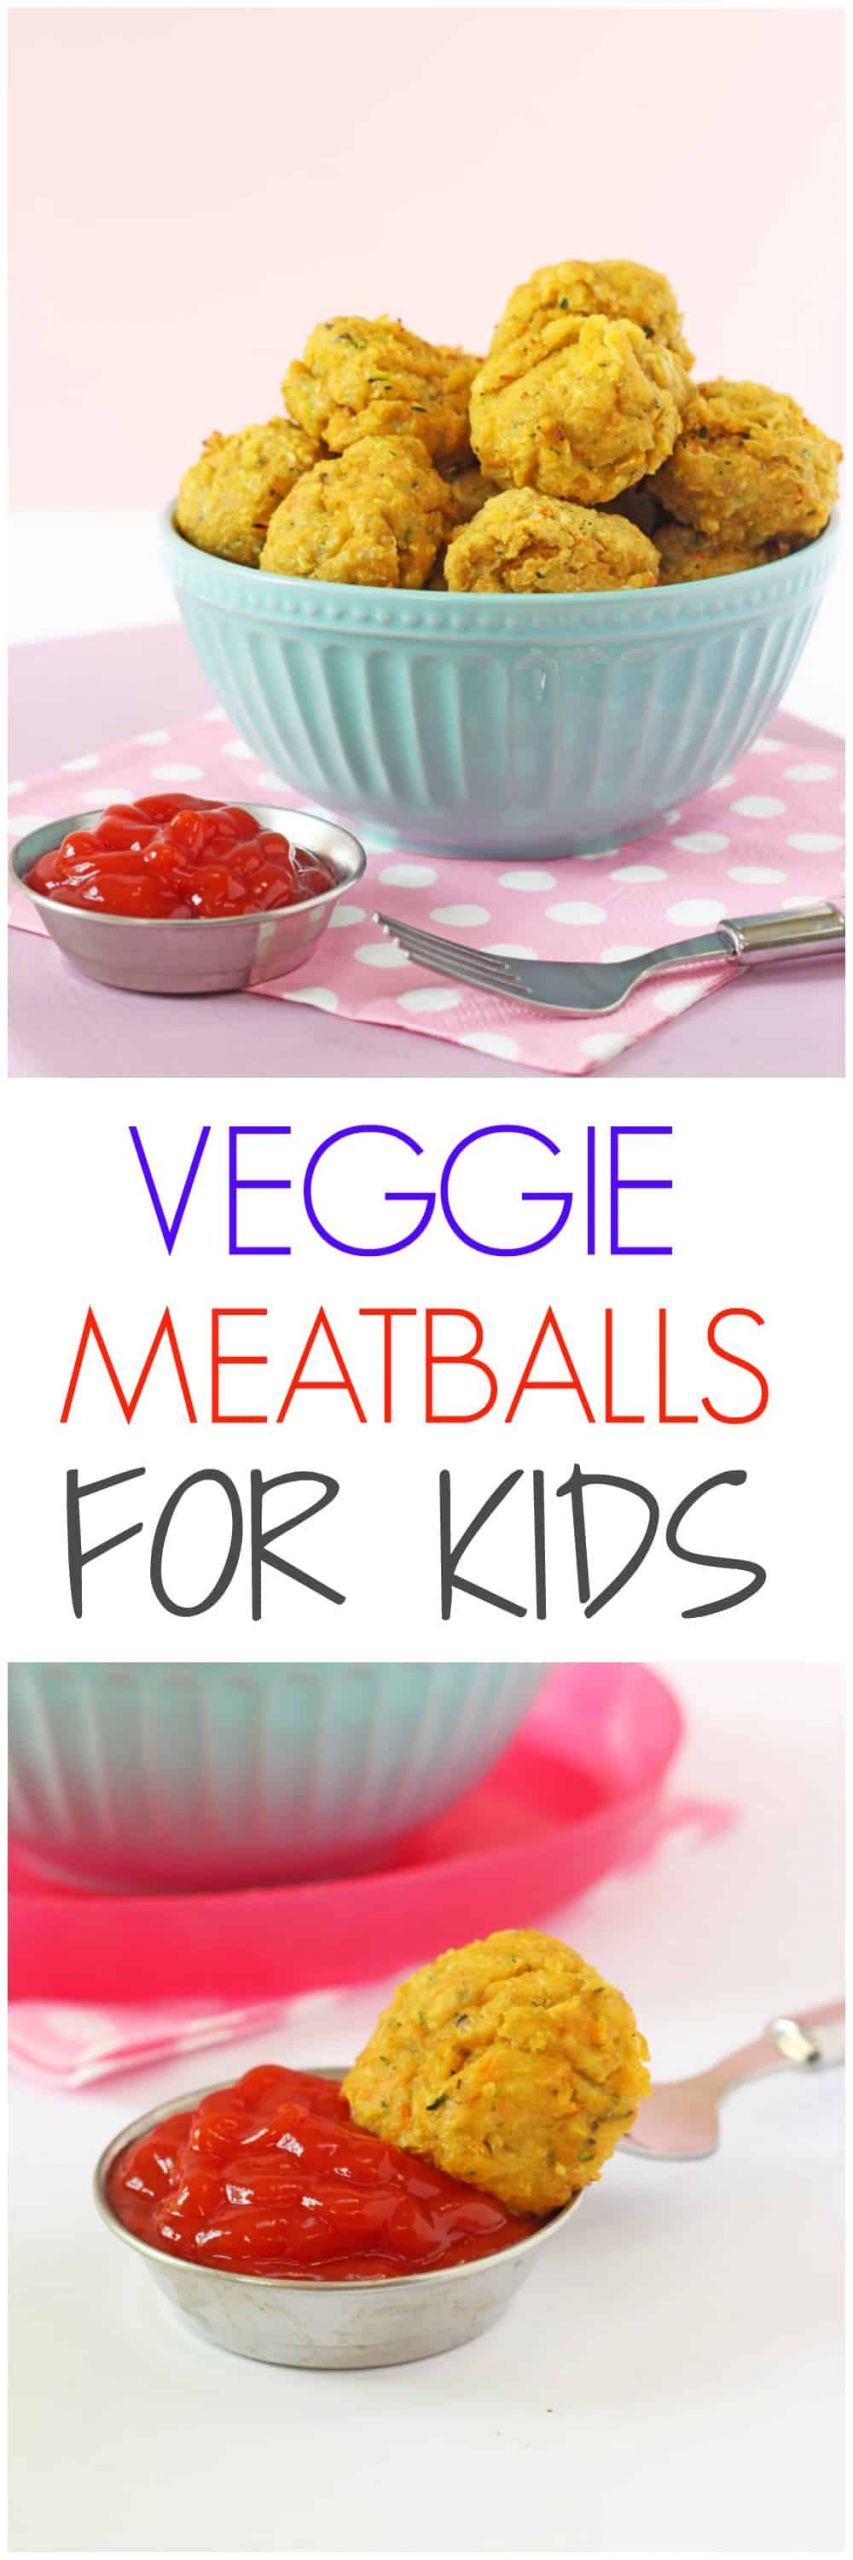 Meatballs Recipes For Kids
 Veggie Meatballs for Kids My Fussy Eater